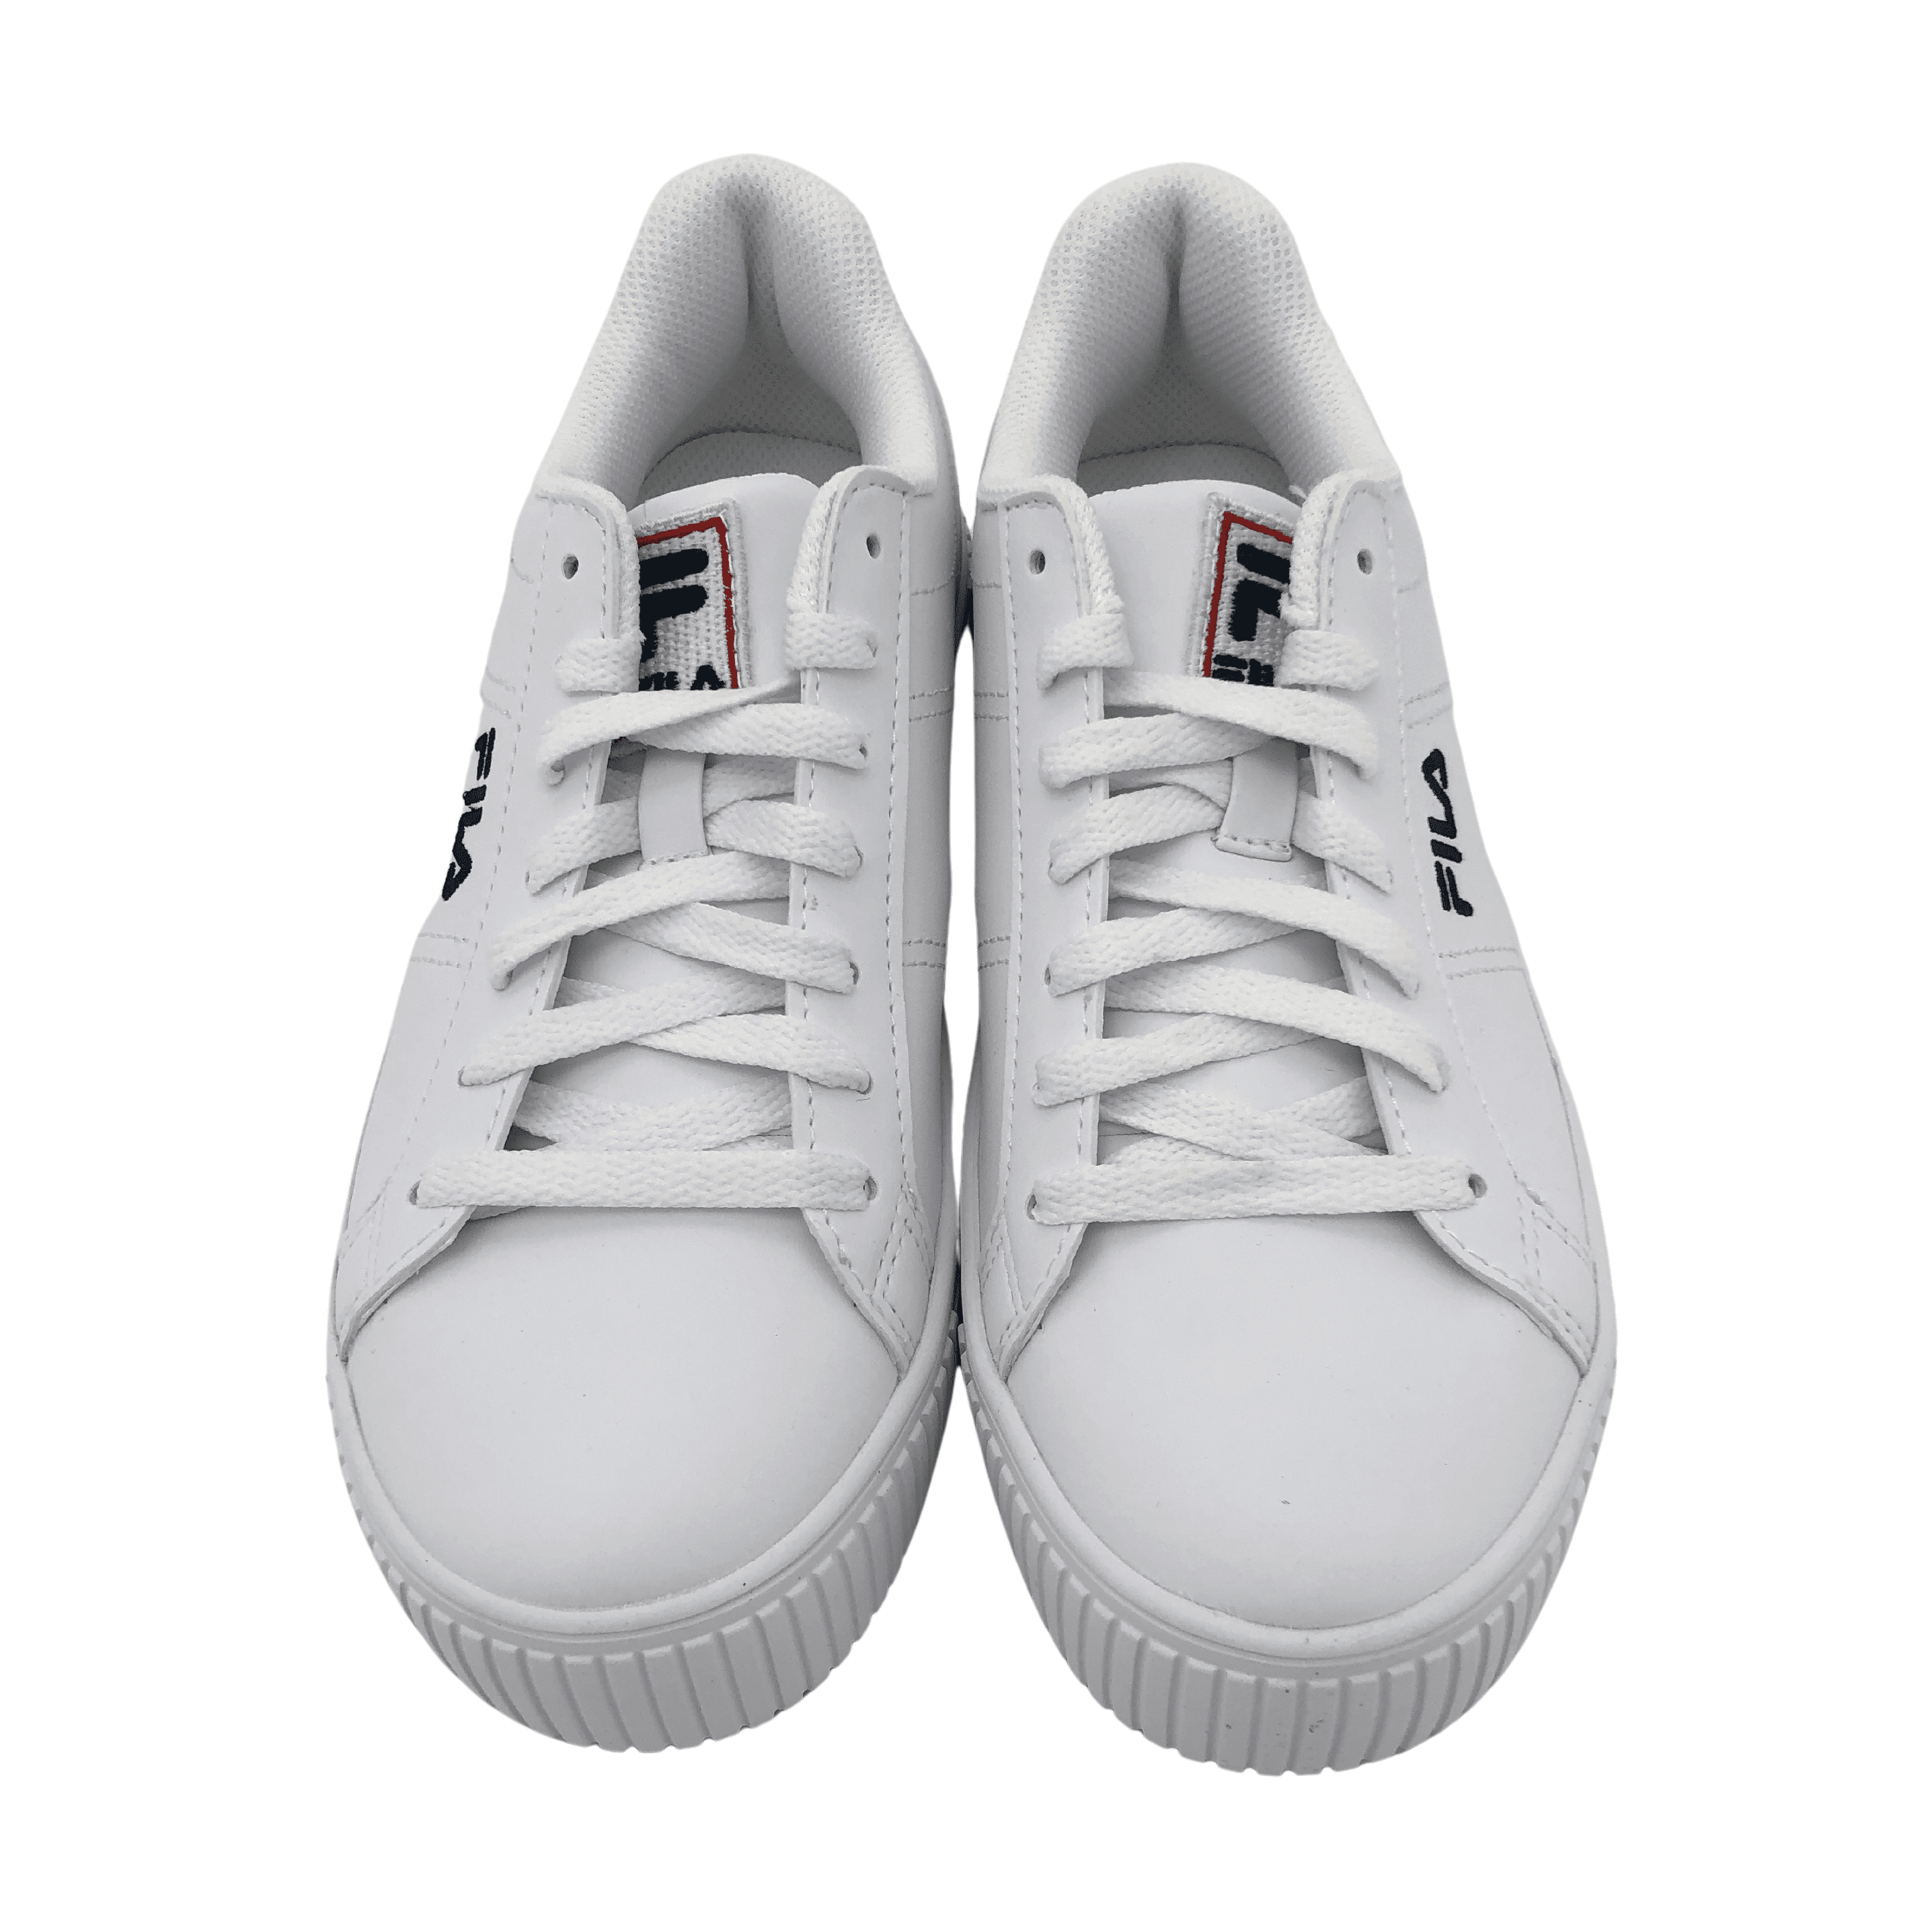 Fila Women's Running Shoe / Redmond / Fashion Sneaker / Size 7.5 / White